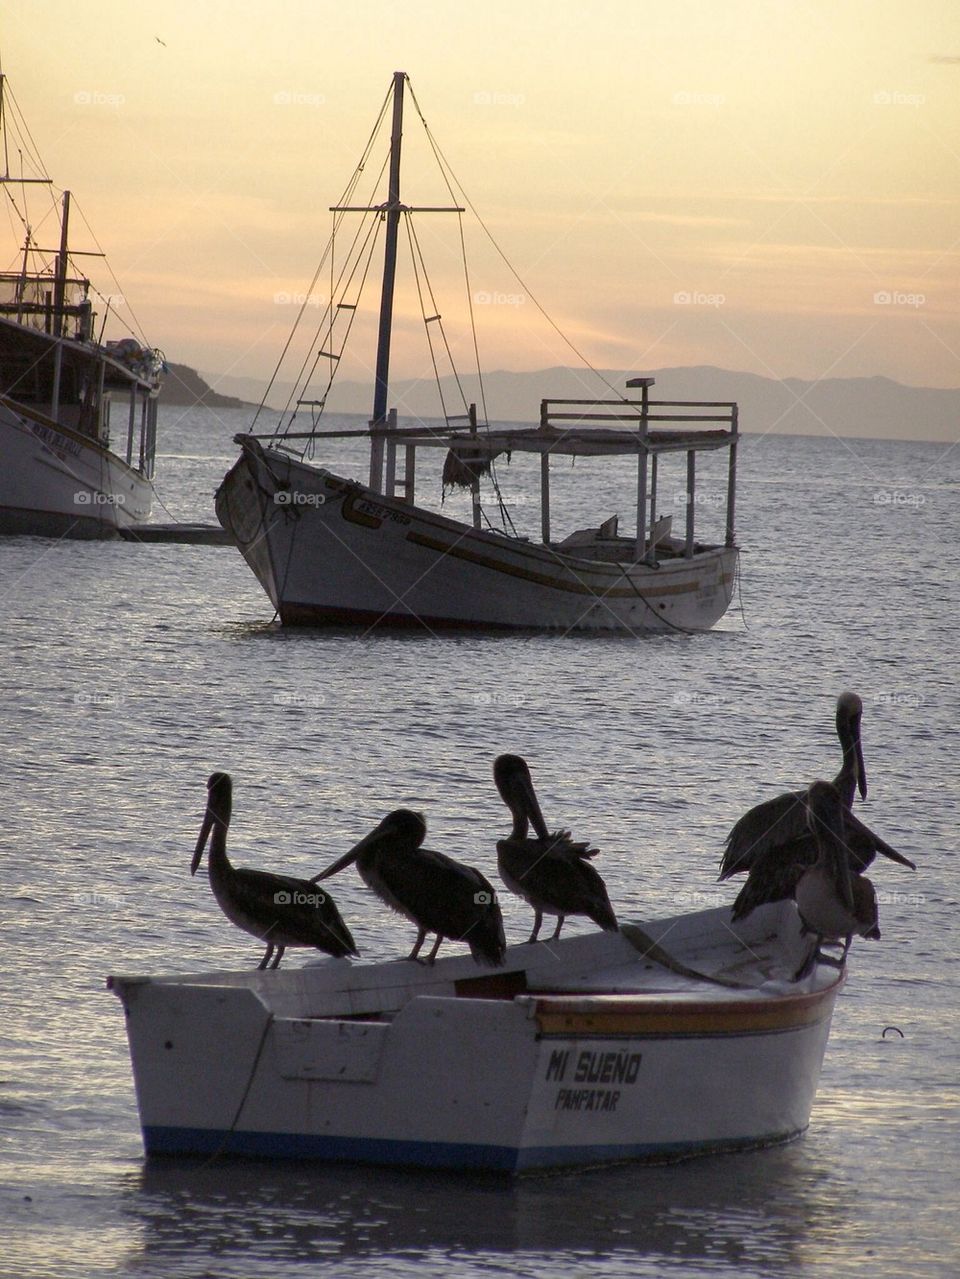 Pelican sunset